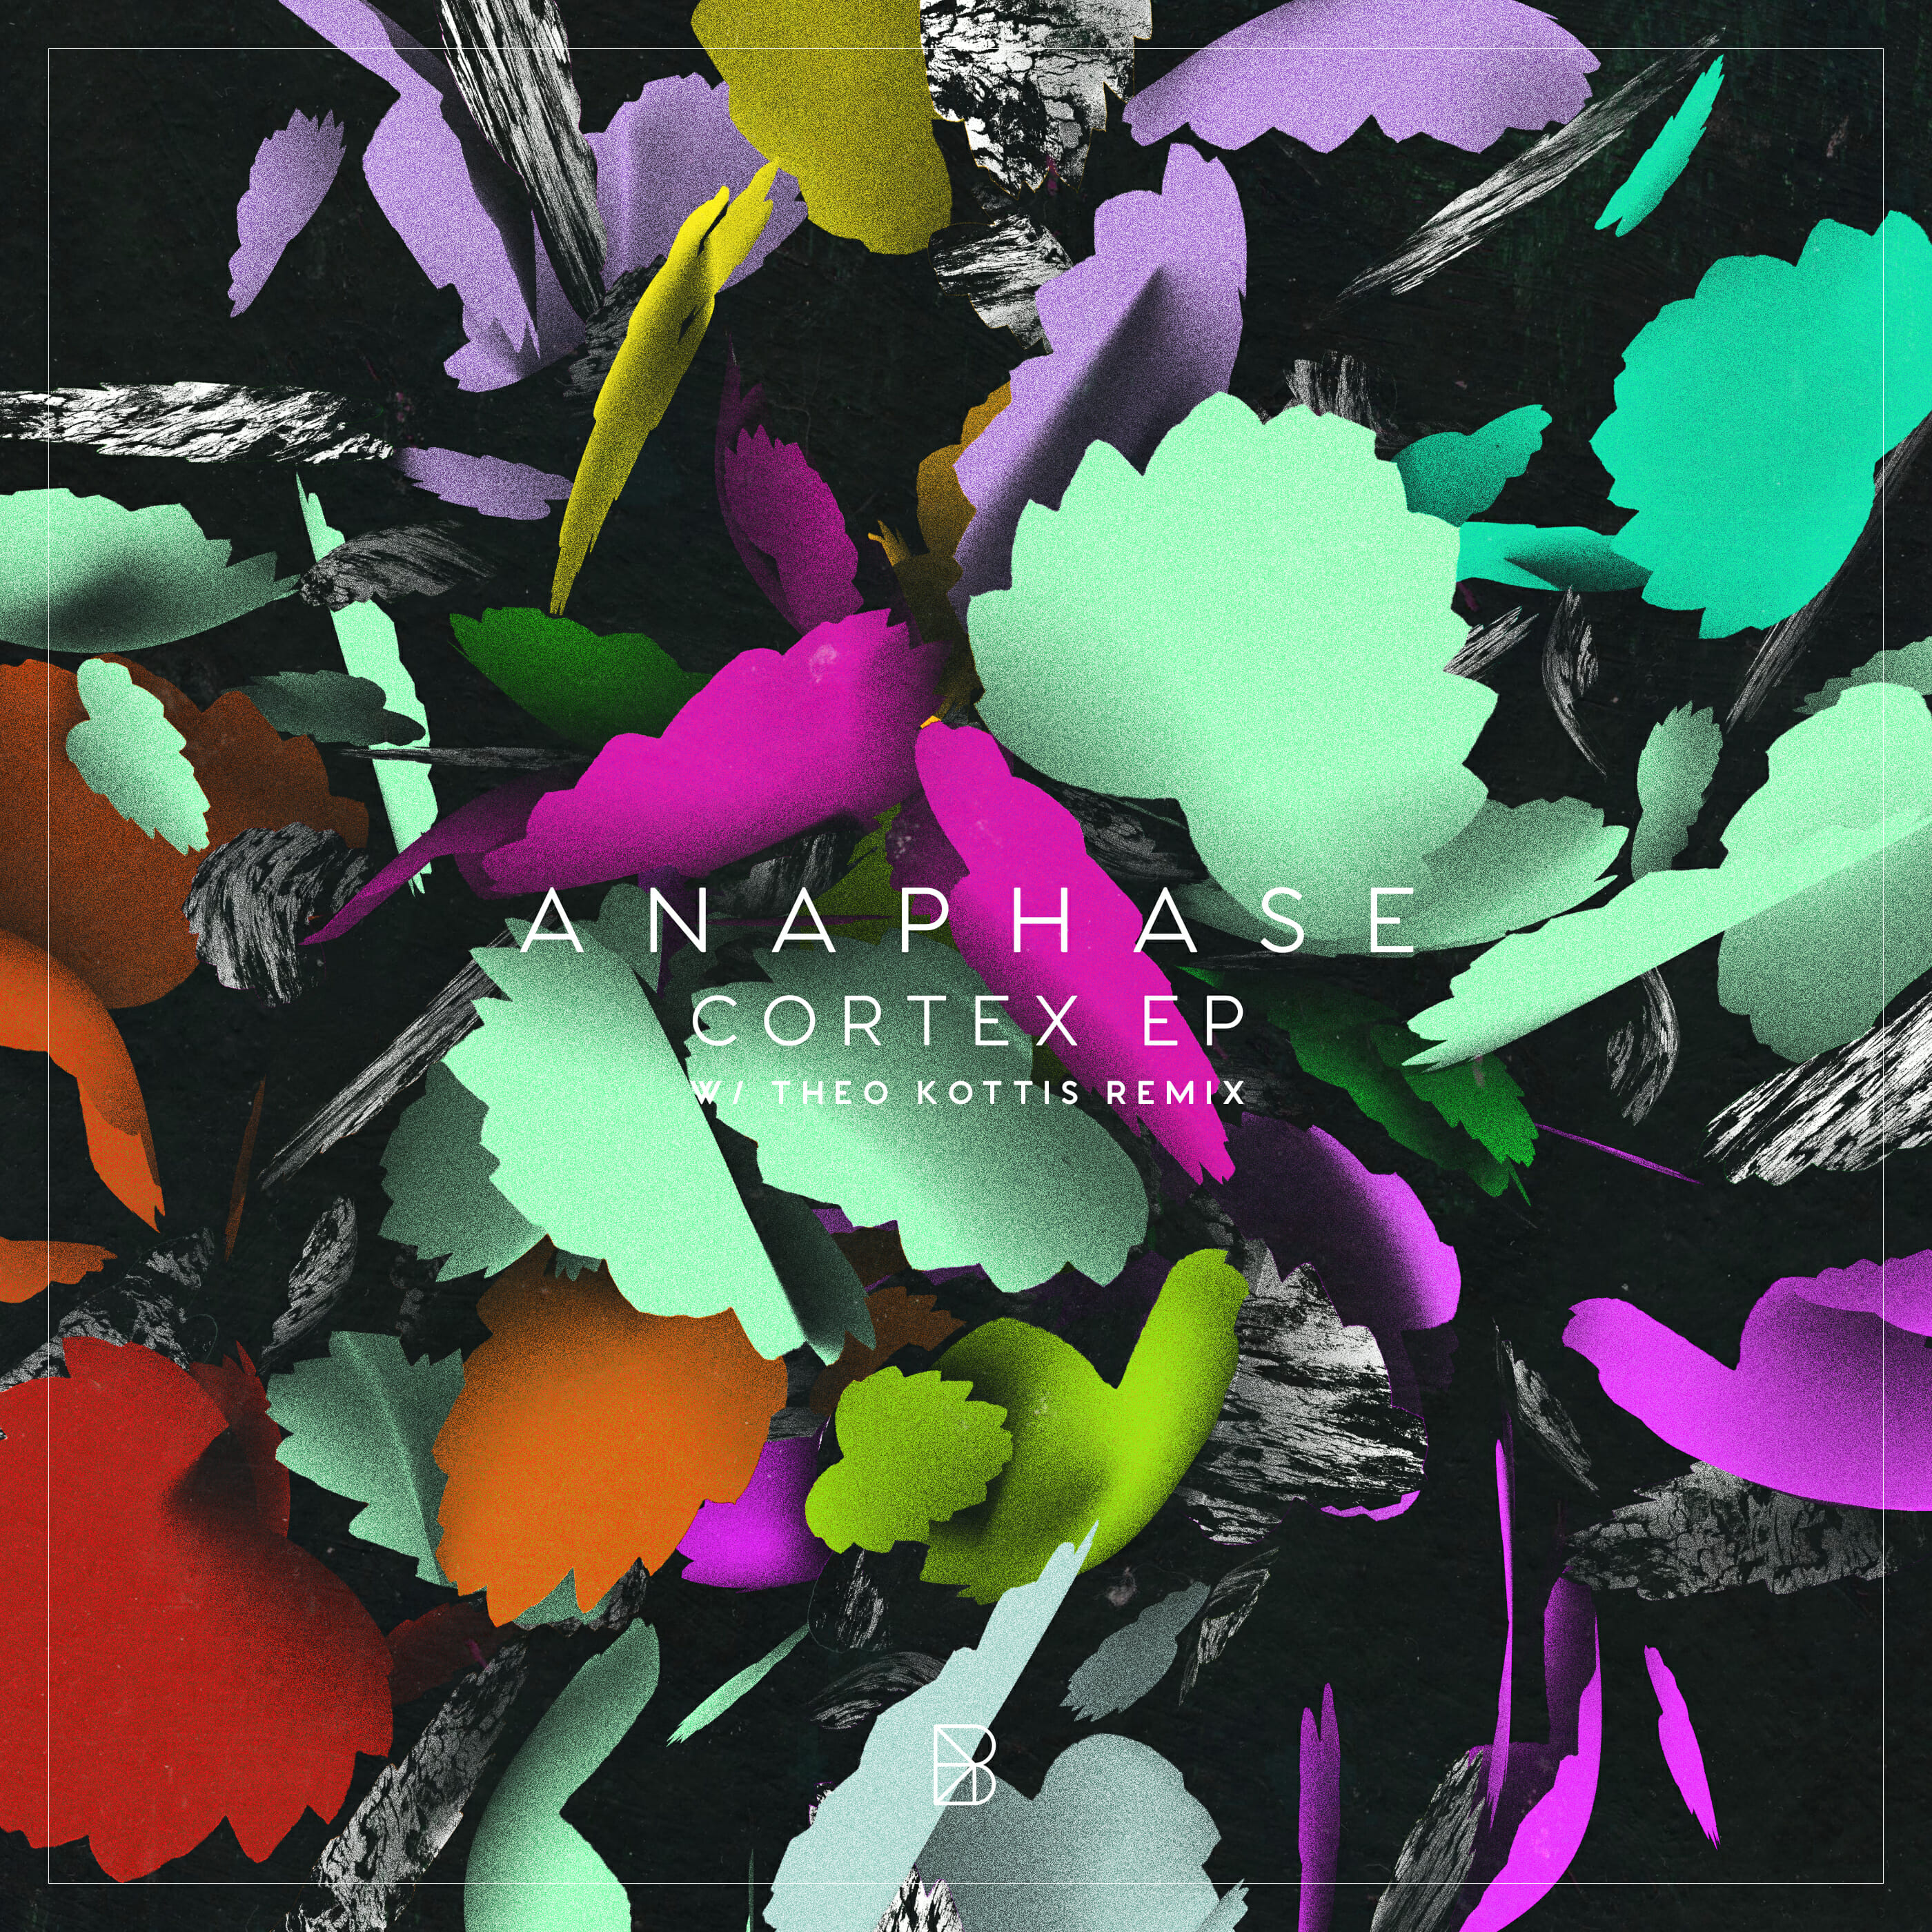 Anaphase delivers mind-bending ‘Cortex’ EP for John Monkman’s Beesemyer MusicWennink Corte Theo Kottis